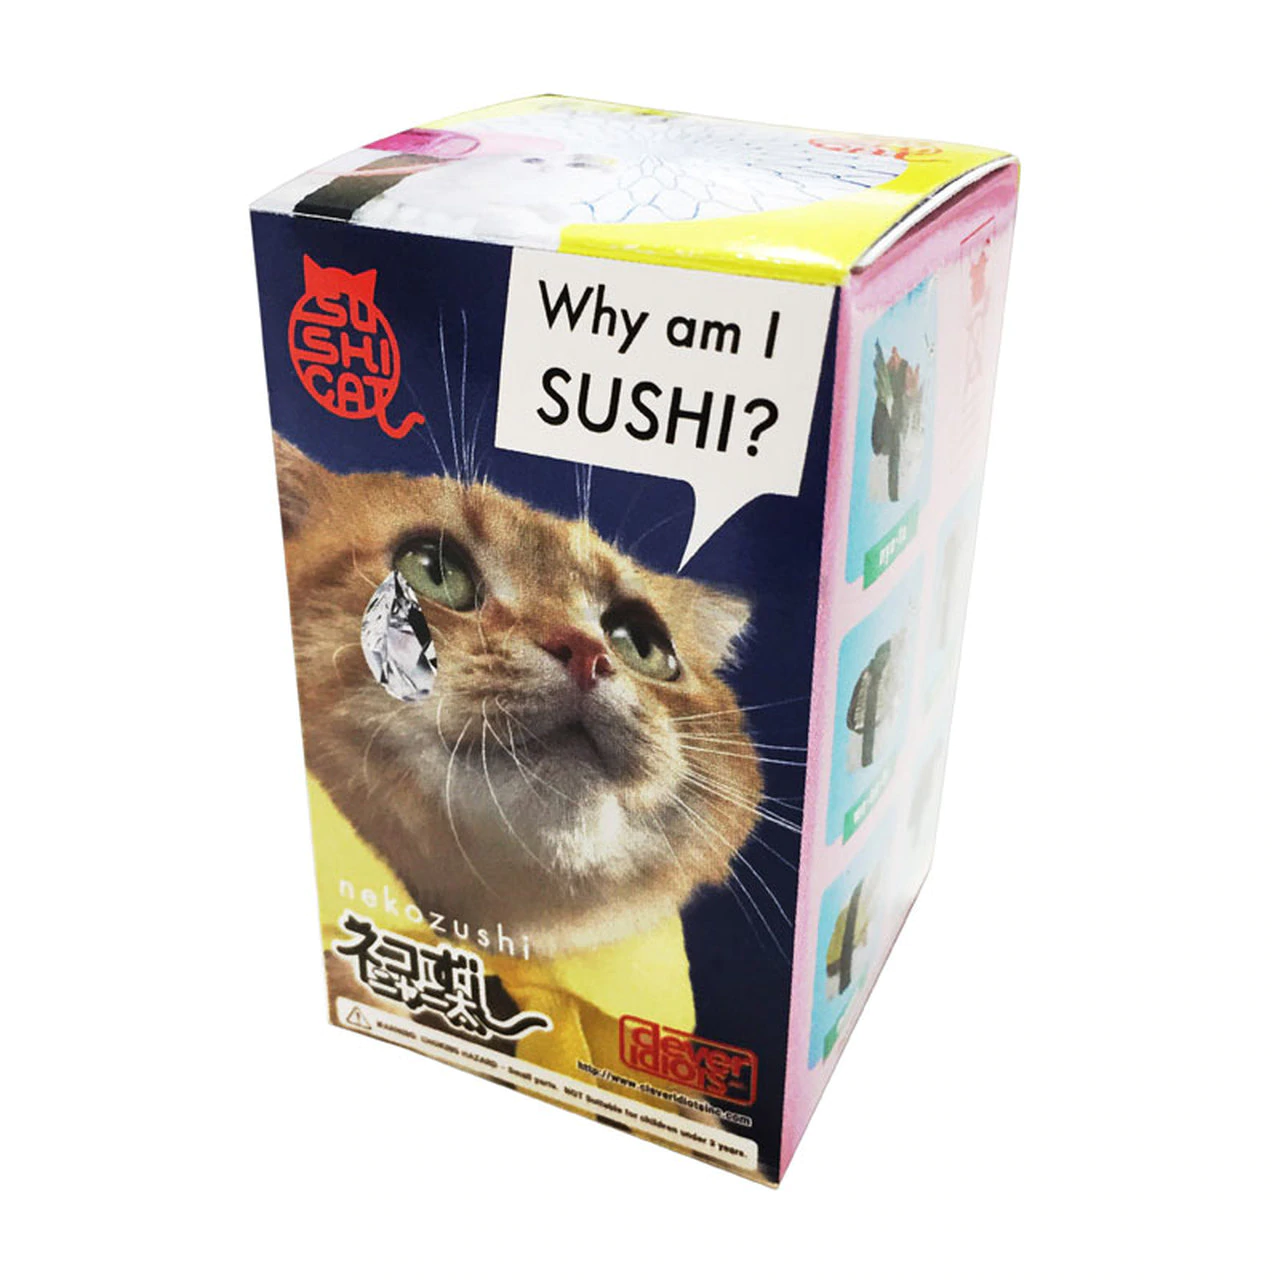 TandNPeanuts Sushi Cats Diamond Teared Crying Cat Box